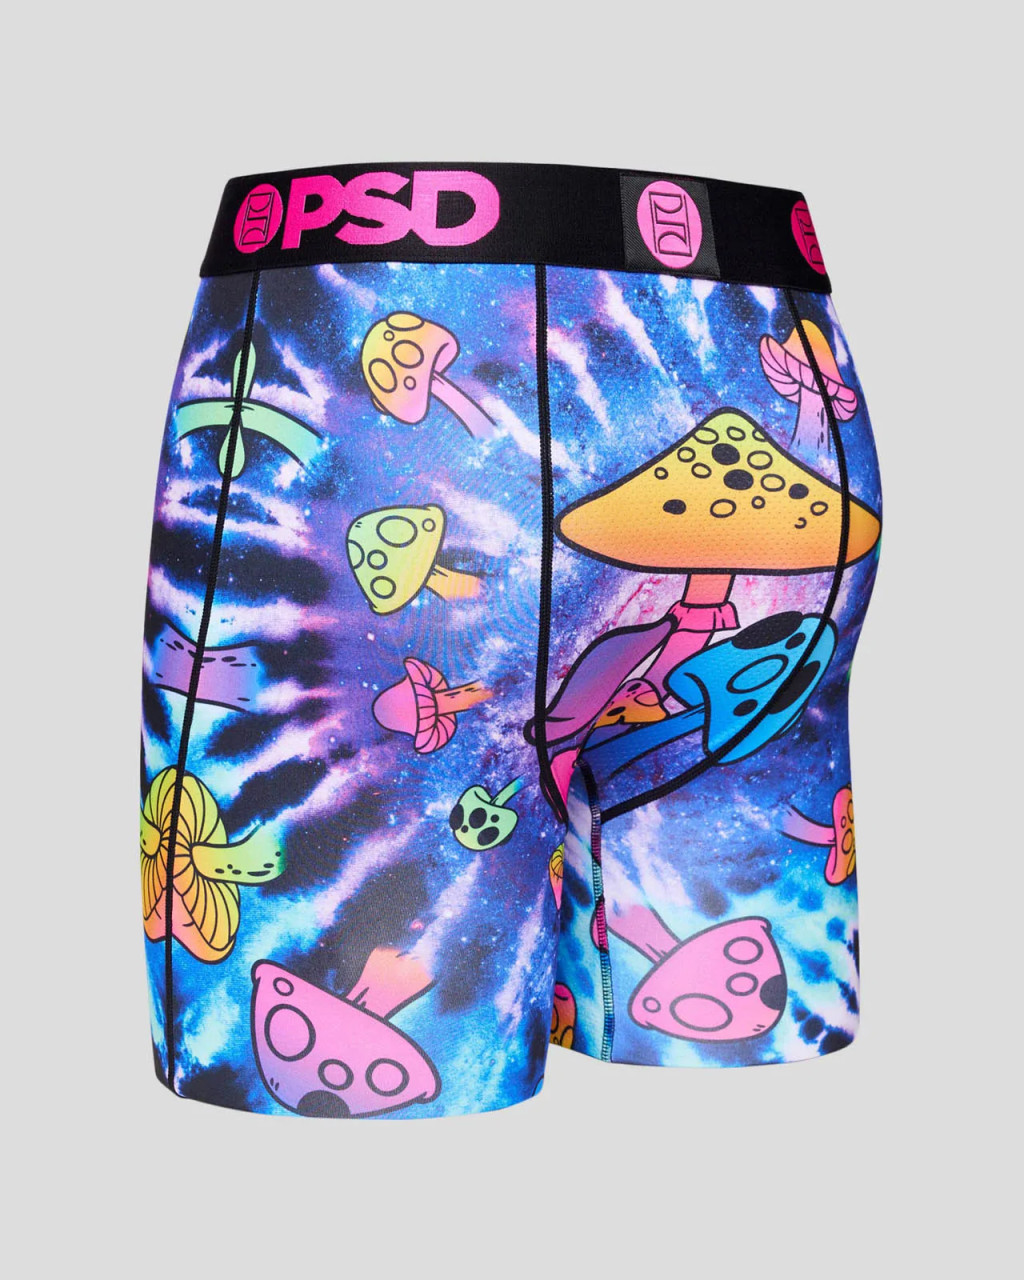 PSD Underwear Men's Boxer Briefs (Blue/Cosmic Gang/S), Blue/Cosmic